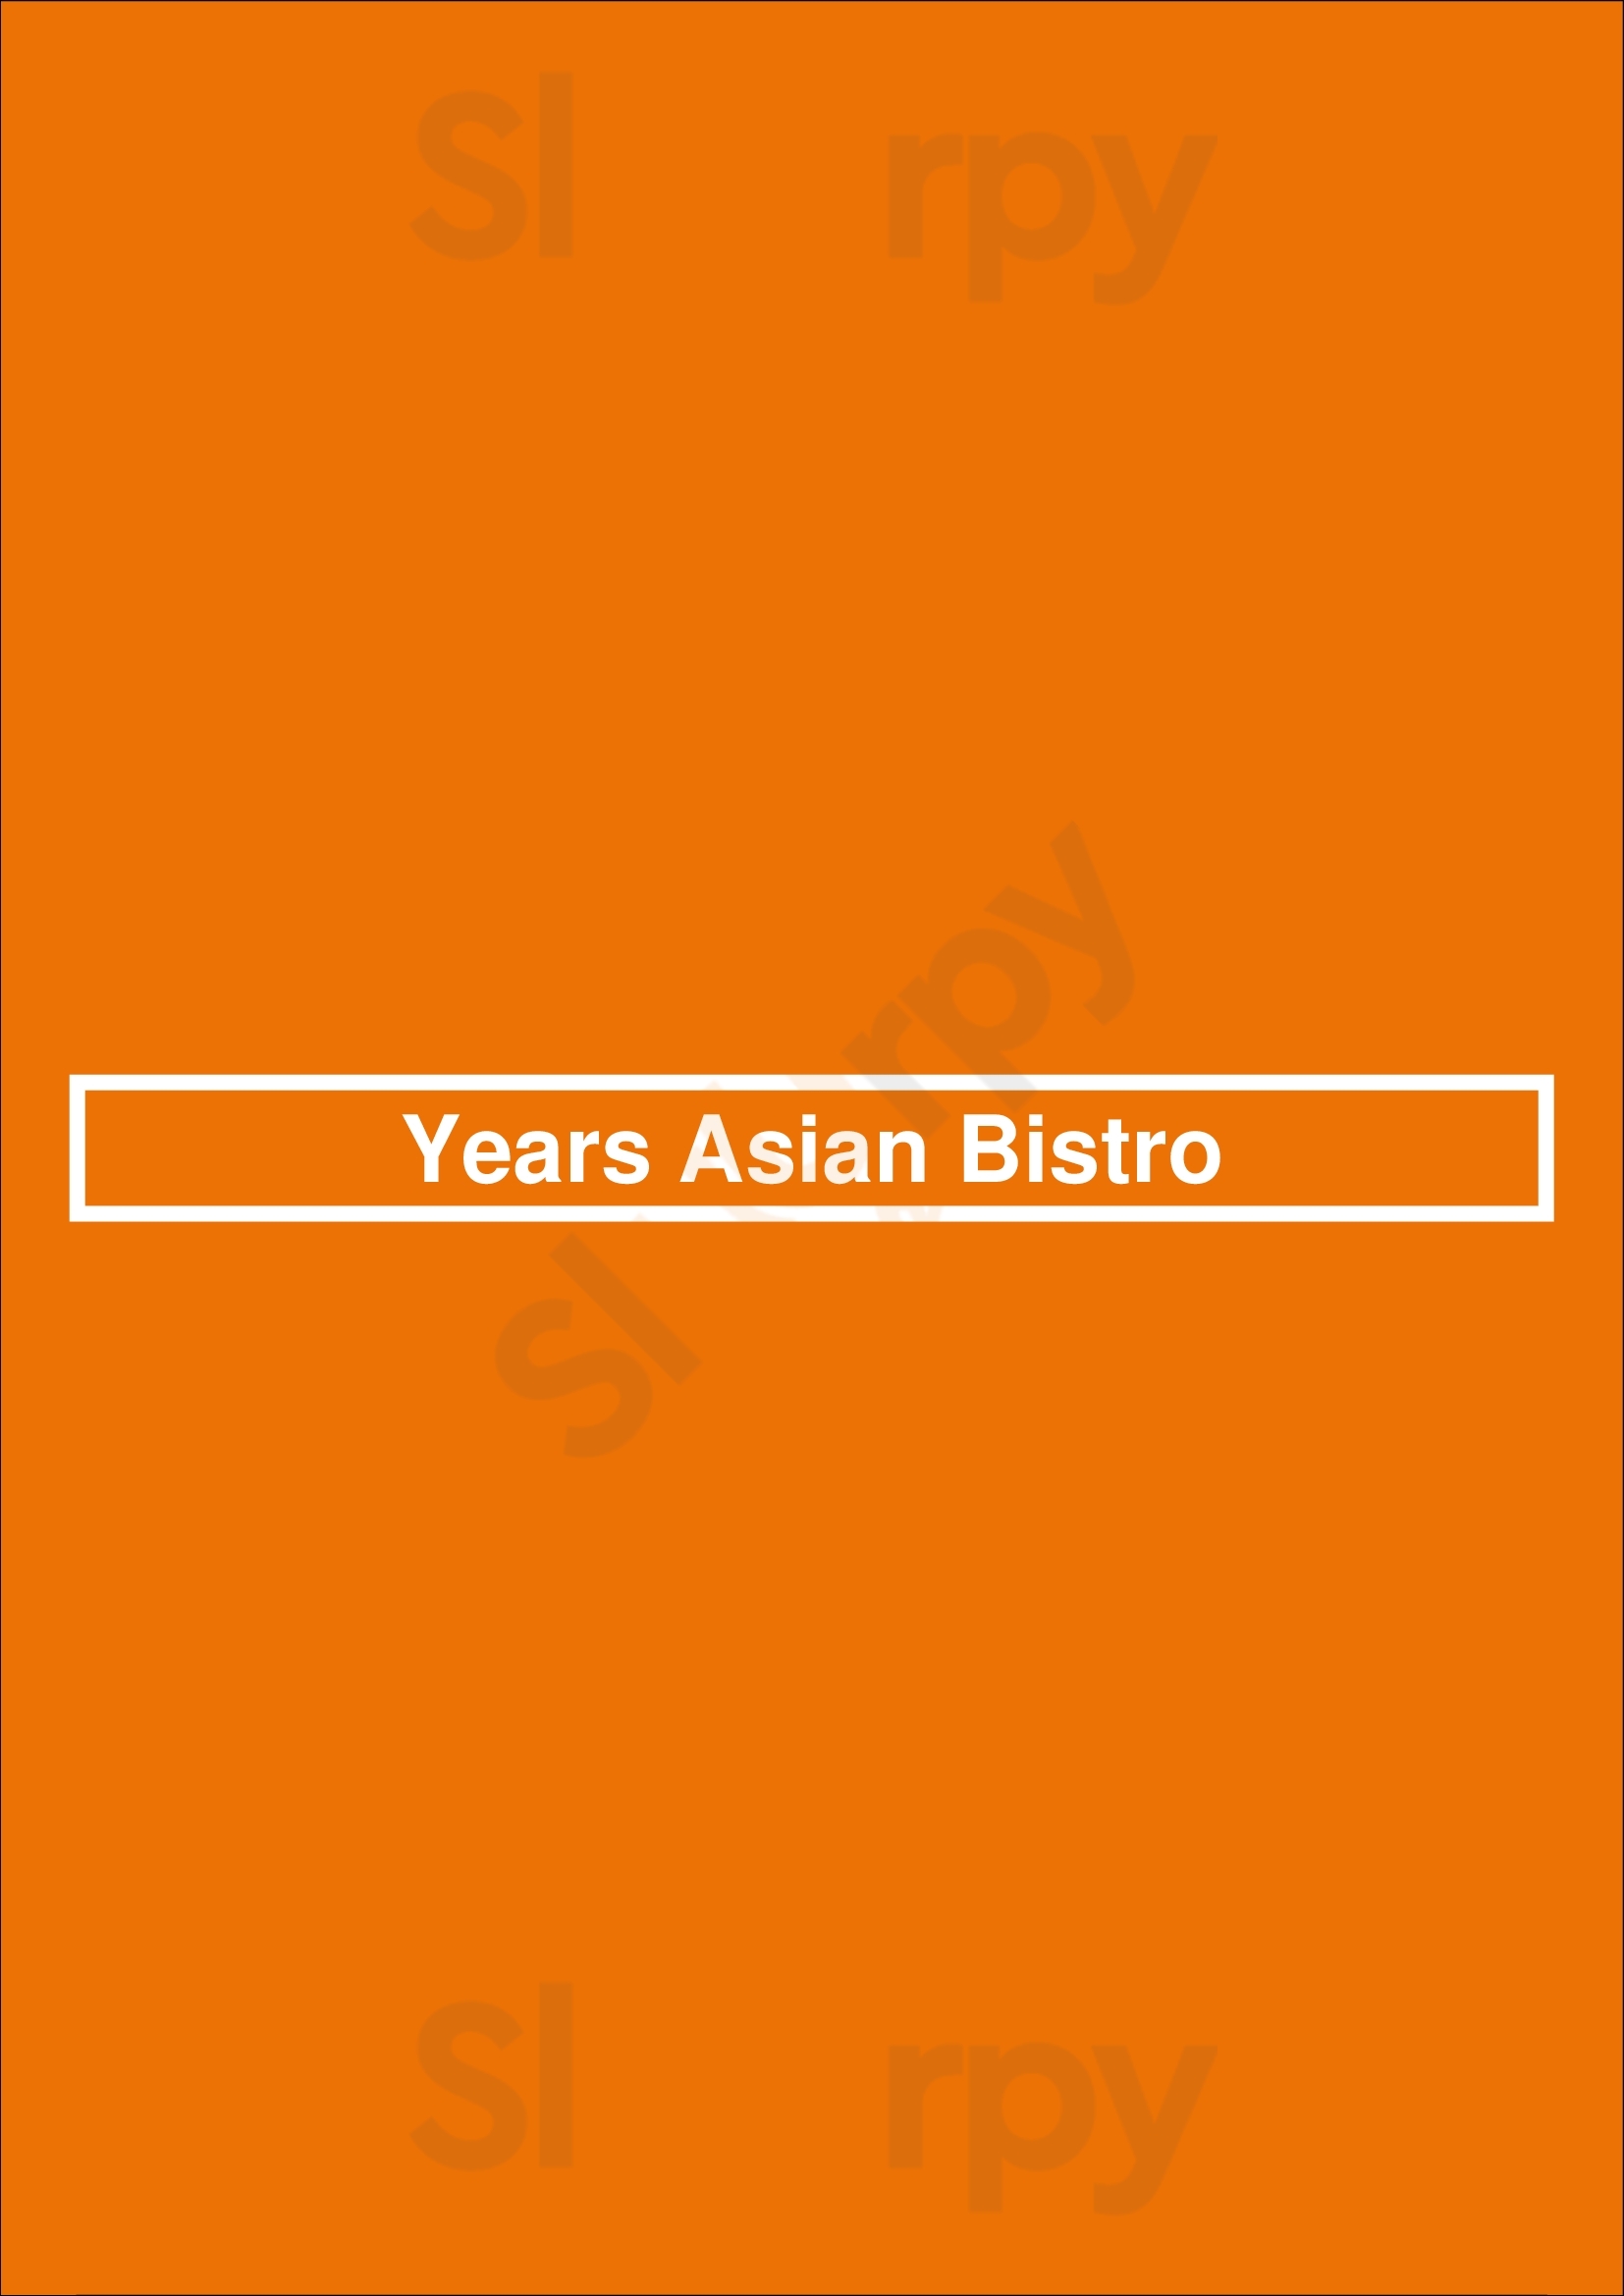 Years Asian Bistro & Bbq Tucson Menu - 1